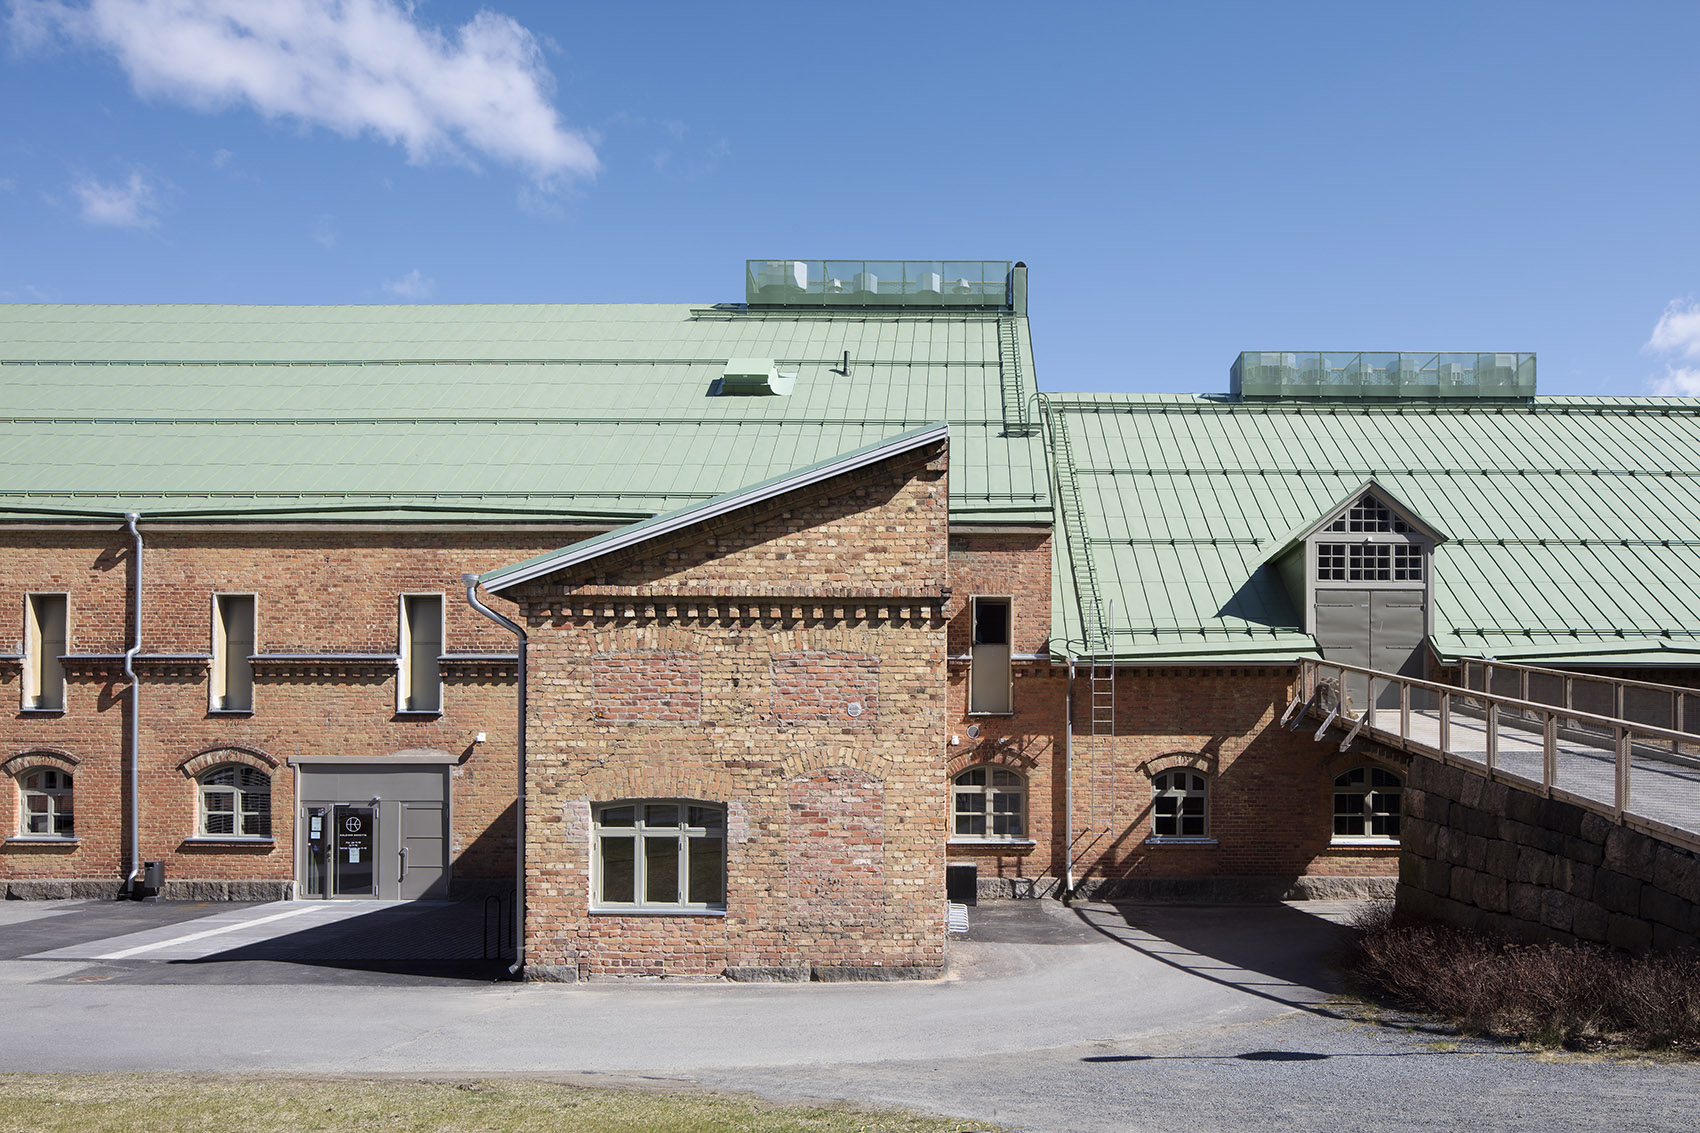 Kalevan Navetta文化艺术中心，芬兰/材料与结构的交响曲-58